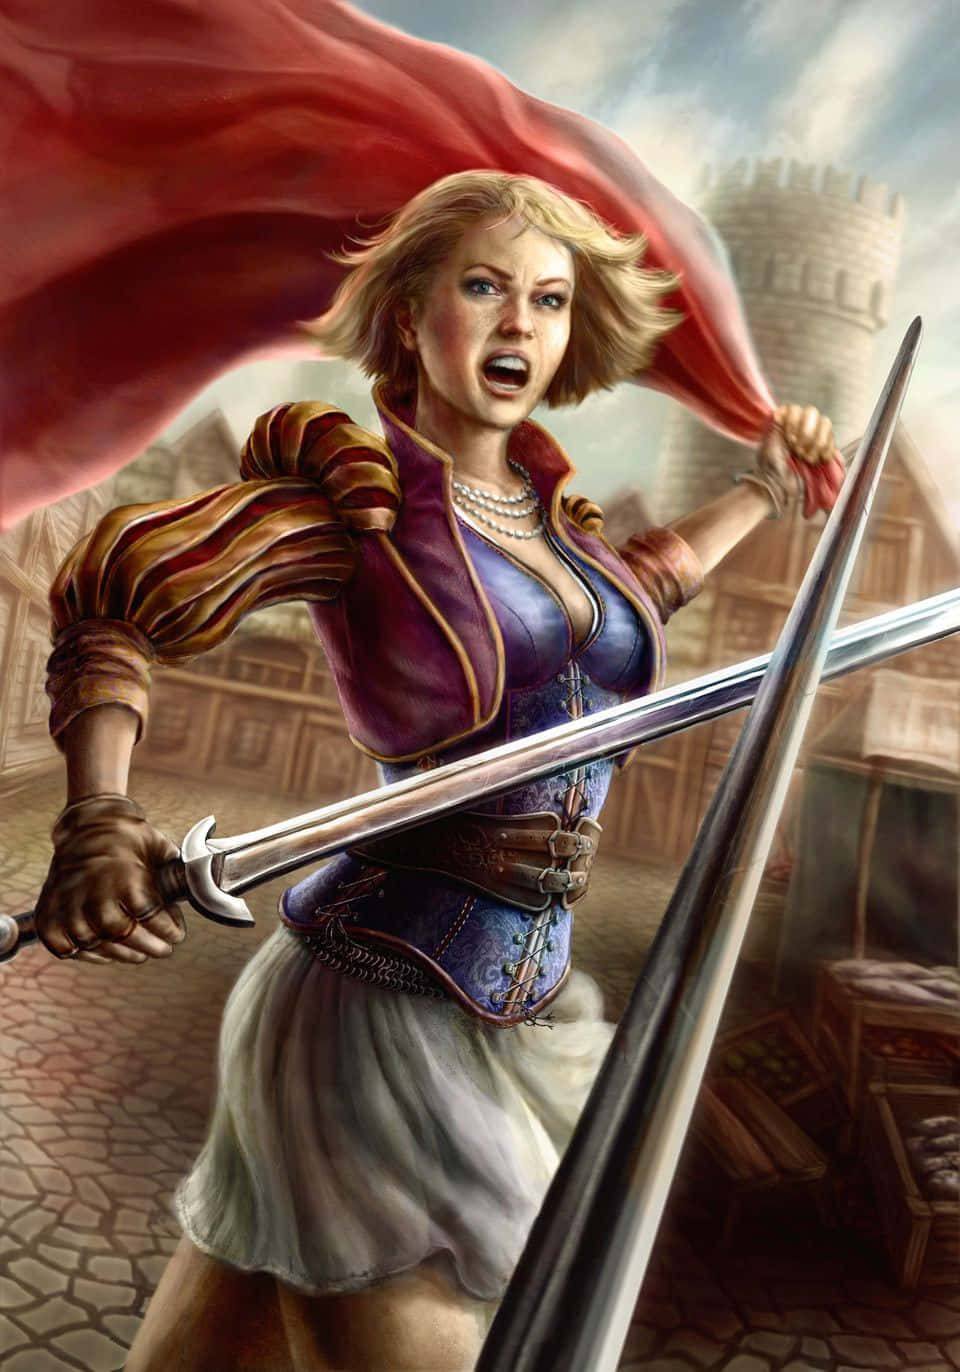 Fierce Warrior Womanwith Sword Wallpaper